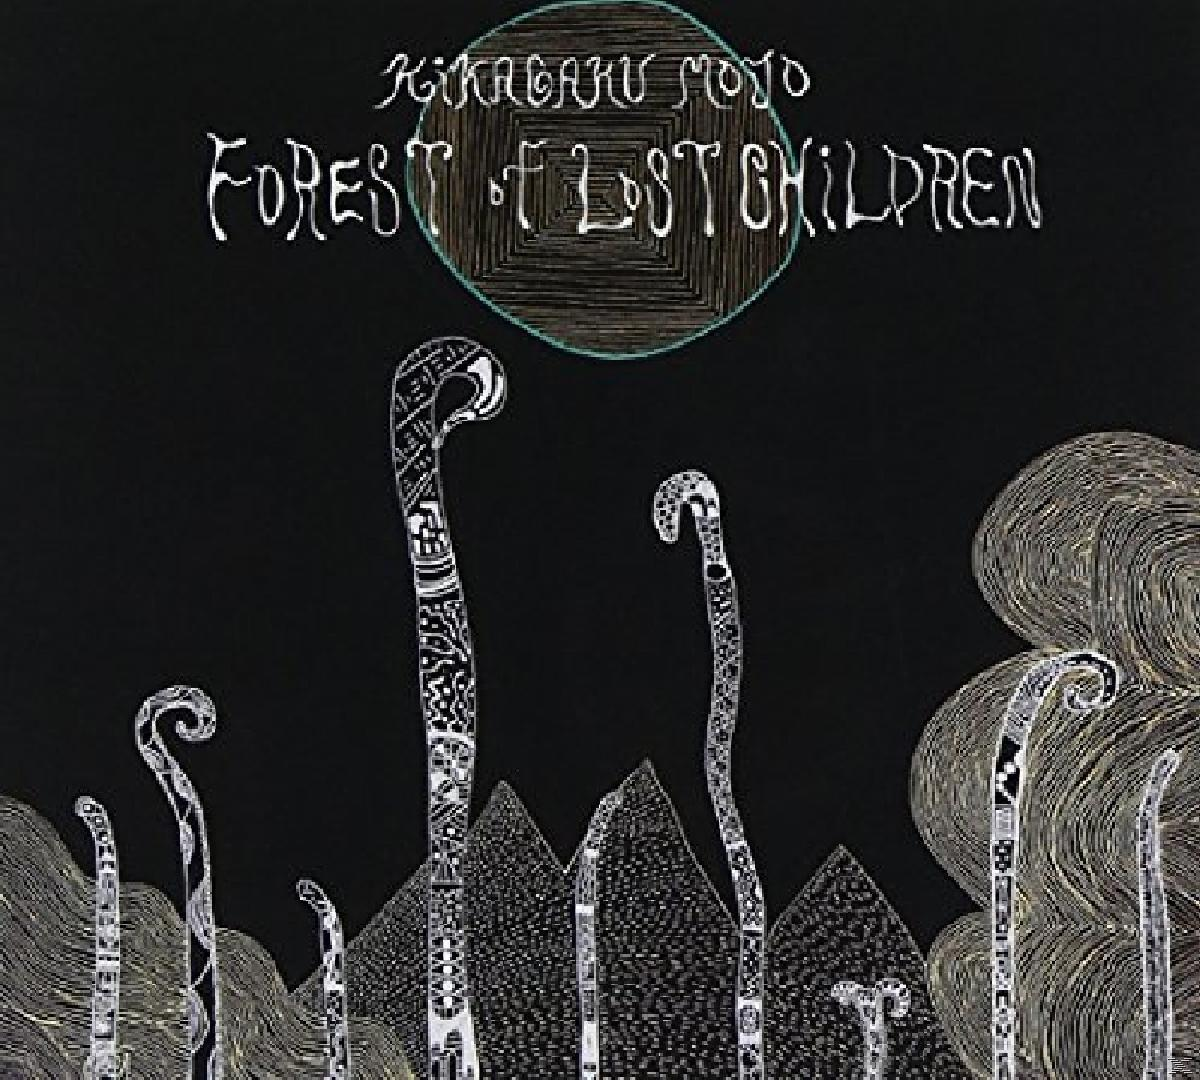 Kikagaku Moyo - Forest Children Lost (CD) of 